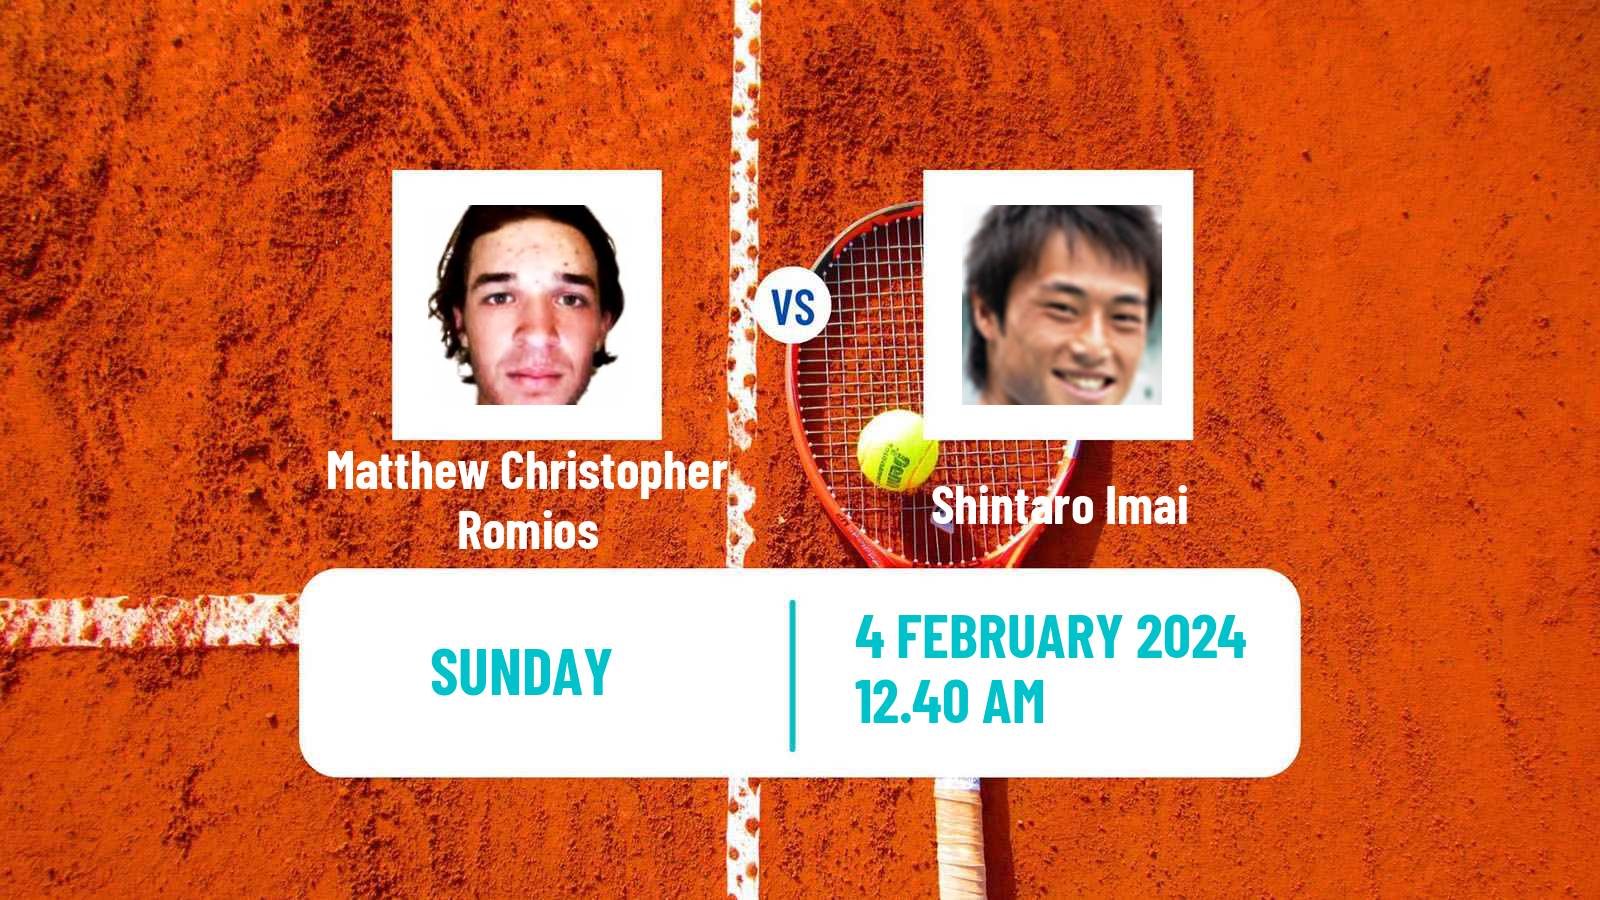 Tennis Burnie 2 Challenger Men Matthew Christopher Romios - Shintaro Imai